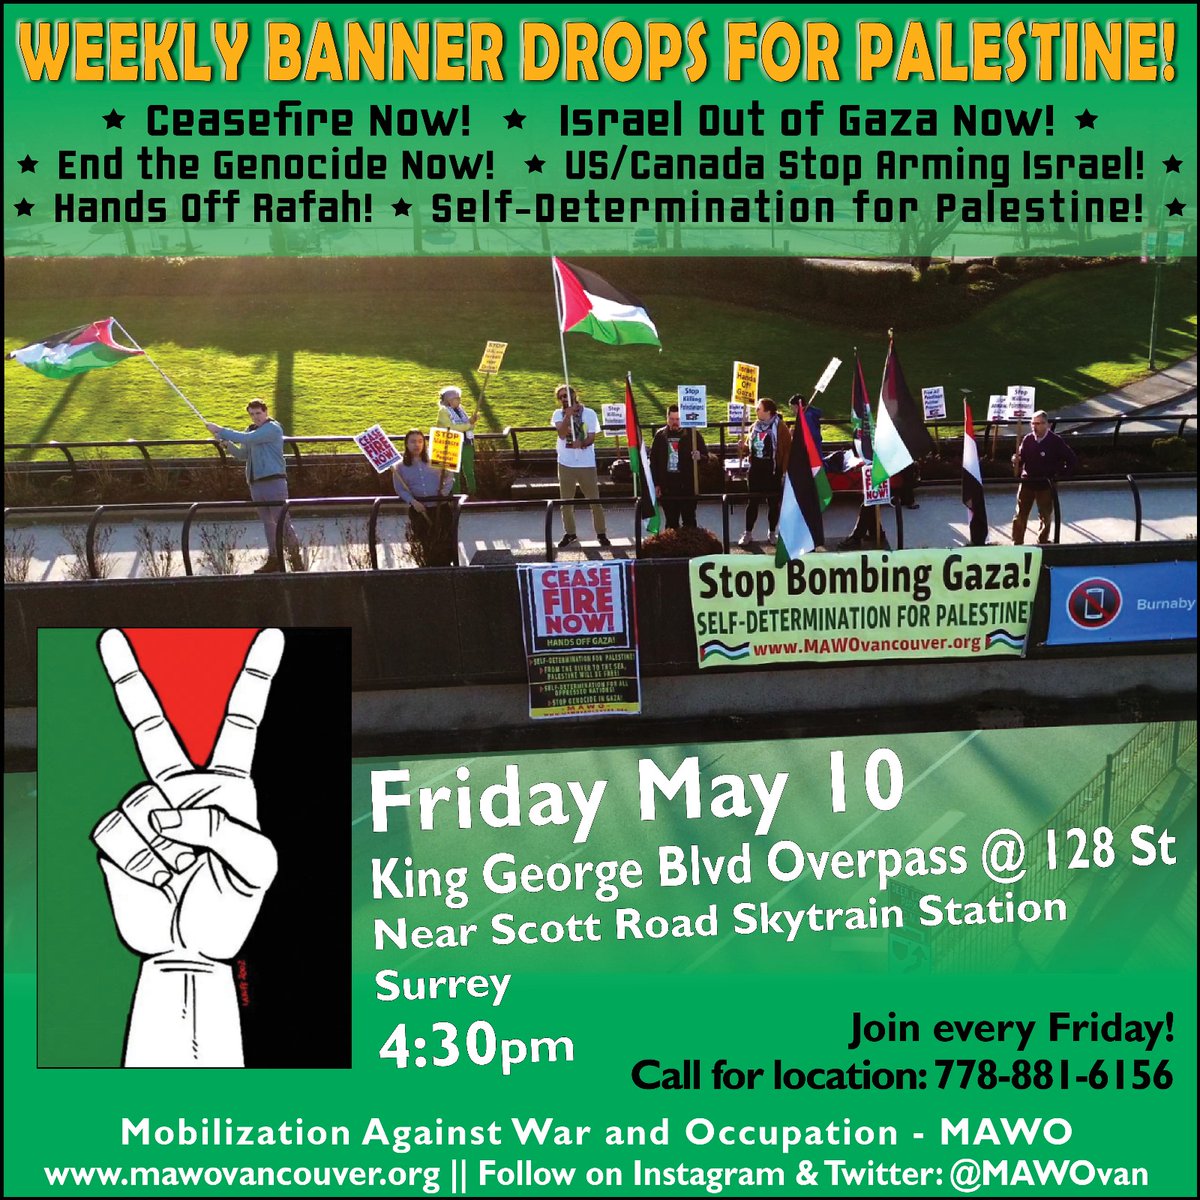 🇵🇸 Join the Weekly Banner Drops for Palestine! 🇵🇸 #HandsOffRafah! #CeasefireNow! FRIDAY May 10 - 4:30pm, King George Blvd @ 128 st (near Scott Road Skytrain Station) #Surrey #Canada #StopBombingRafah #endthegenocide #FreePalestine #ArmsEmbargoNow #alleyesonrafah #StopBombingGaza